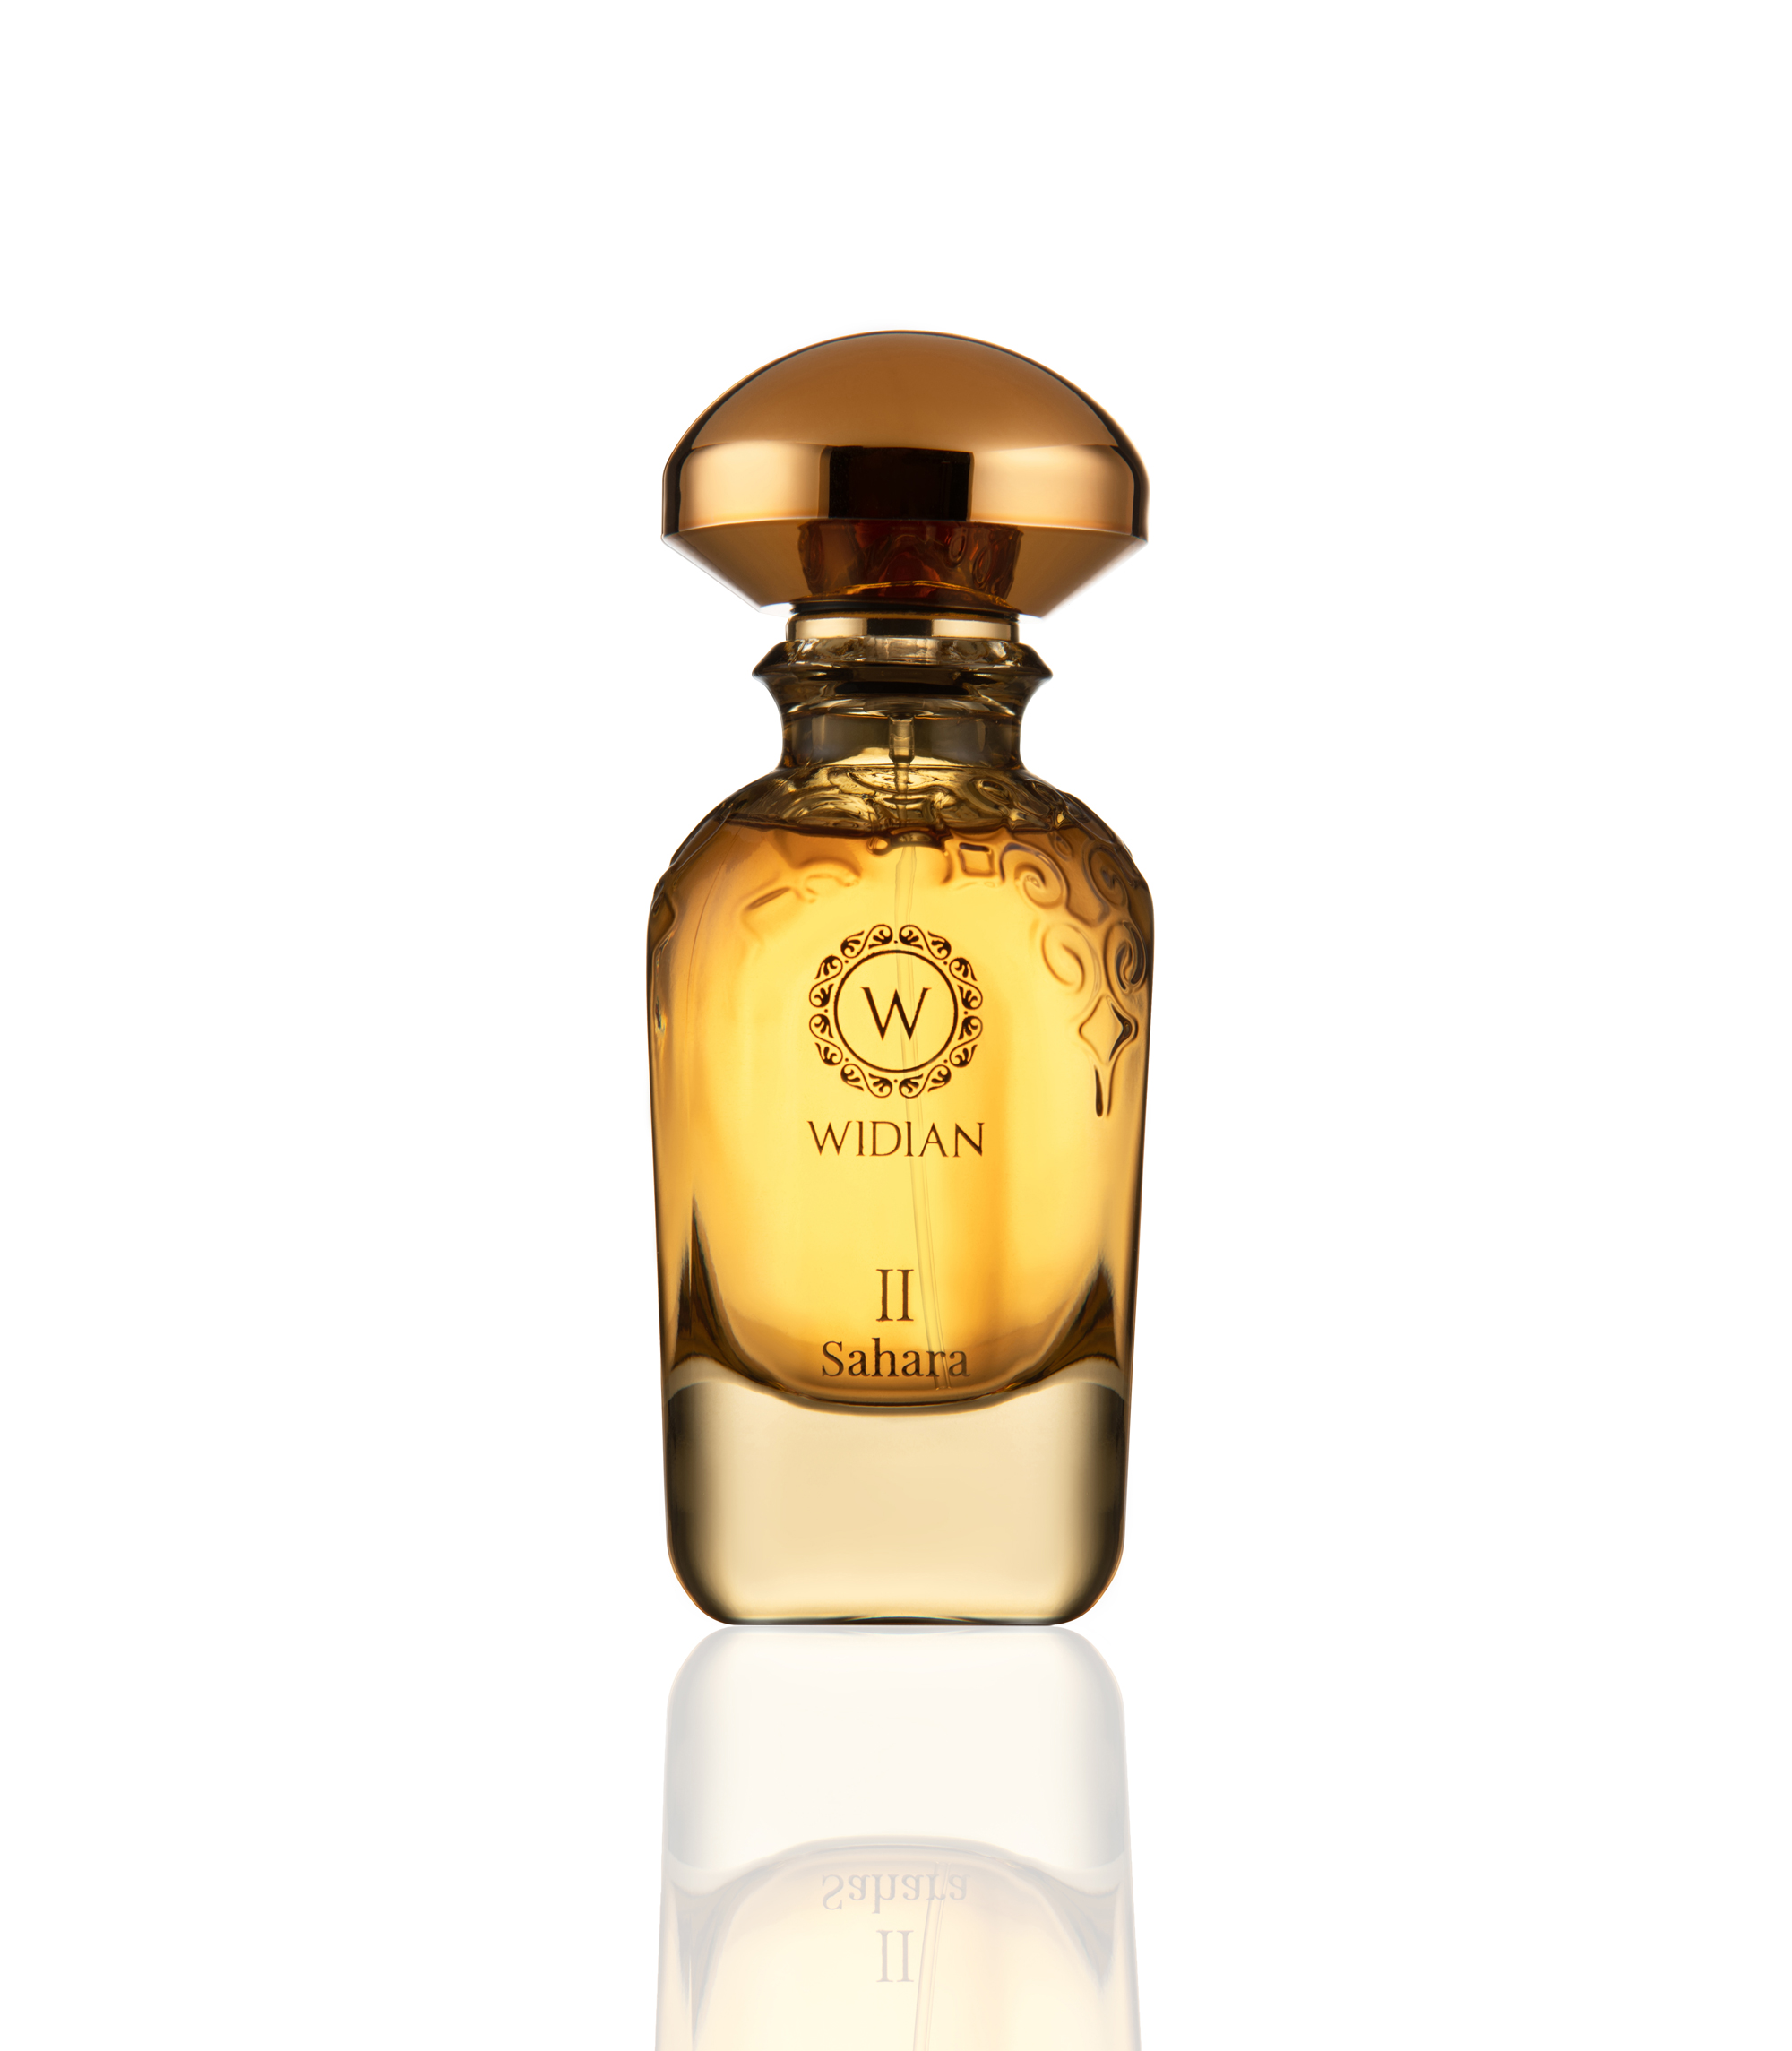 Gold II Sahara WIDIAN perfume - a fragrance for women and men 2019